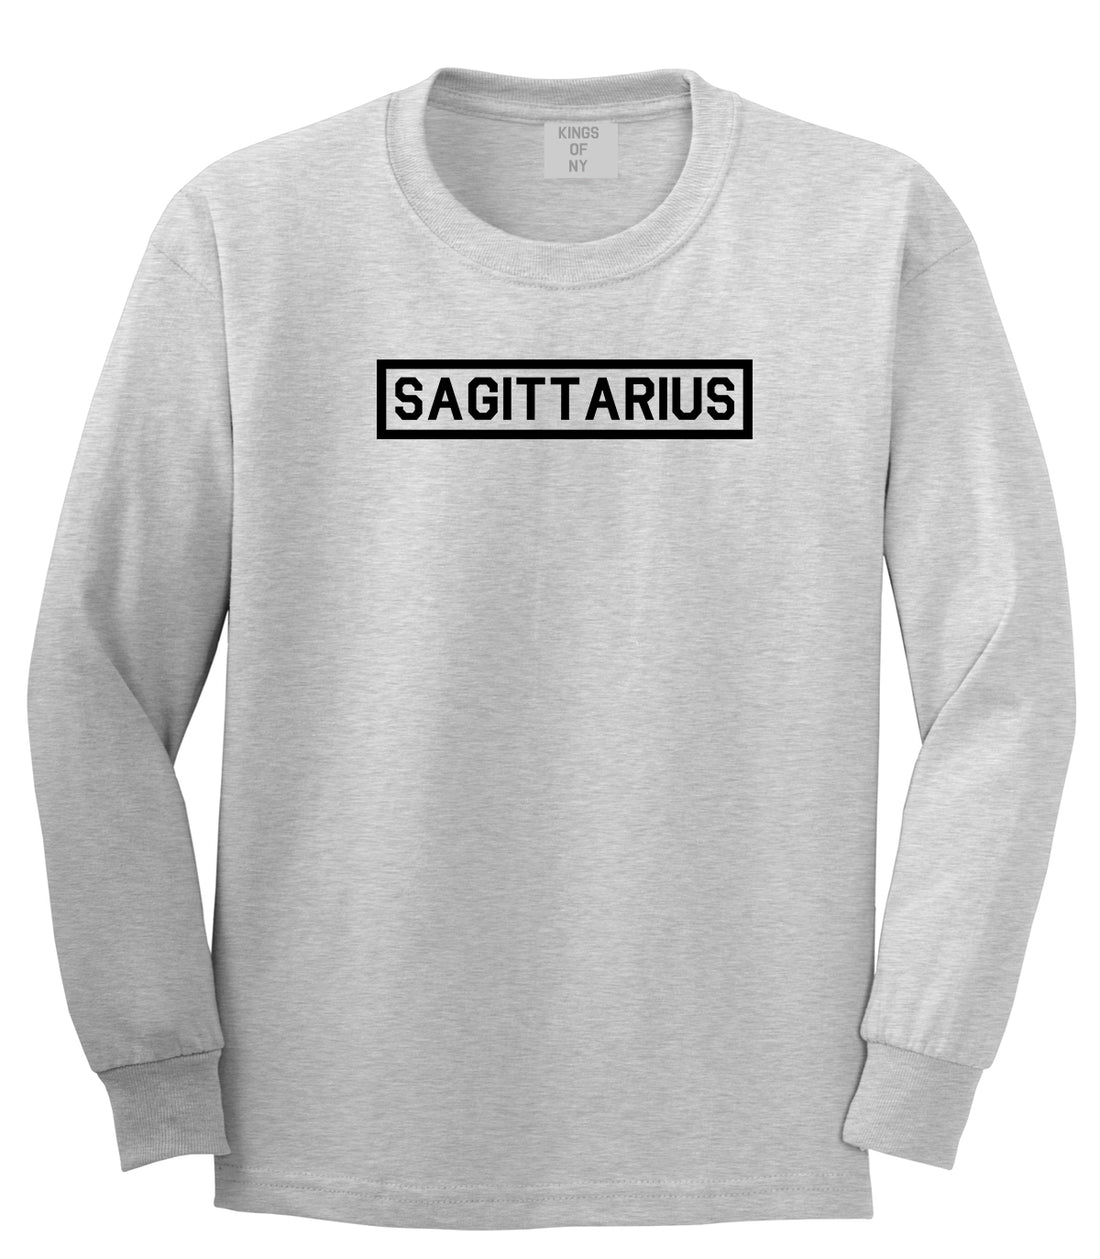 Sagittarius Horoscope Sign Mens Grey Long Sleeve T-Shirt by KINGS OF NY